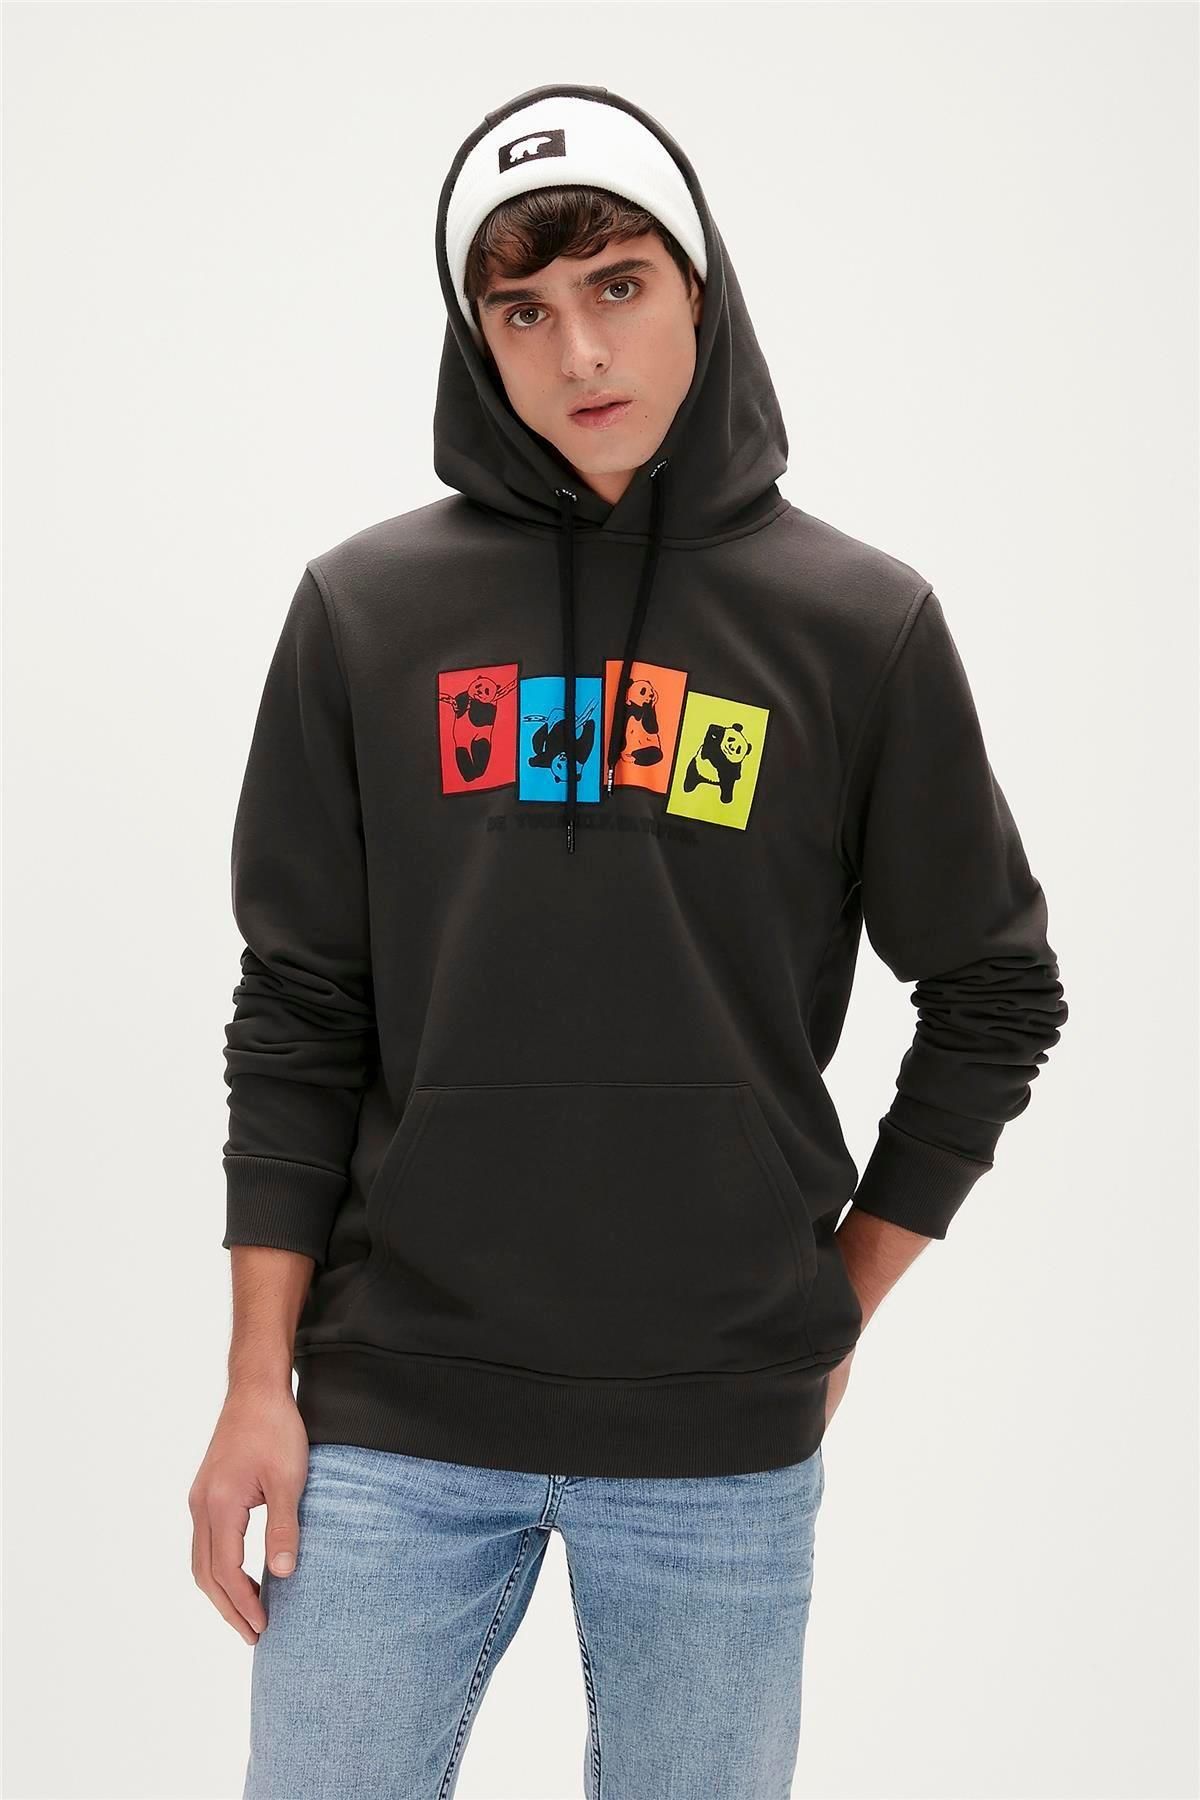 Bad Bear 23.02.12.004-c02 Fun Erkek Sweatshirt